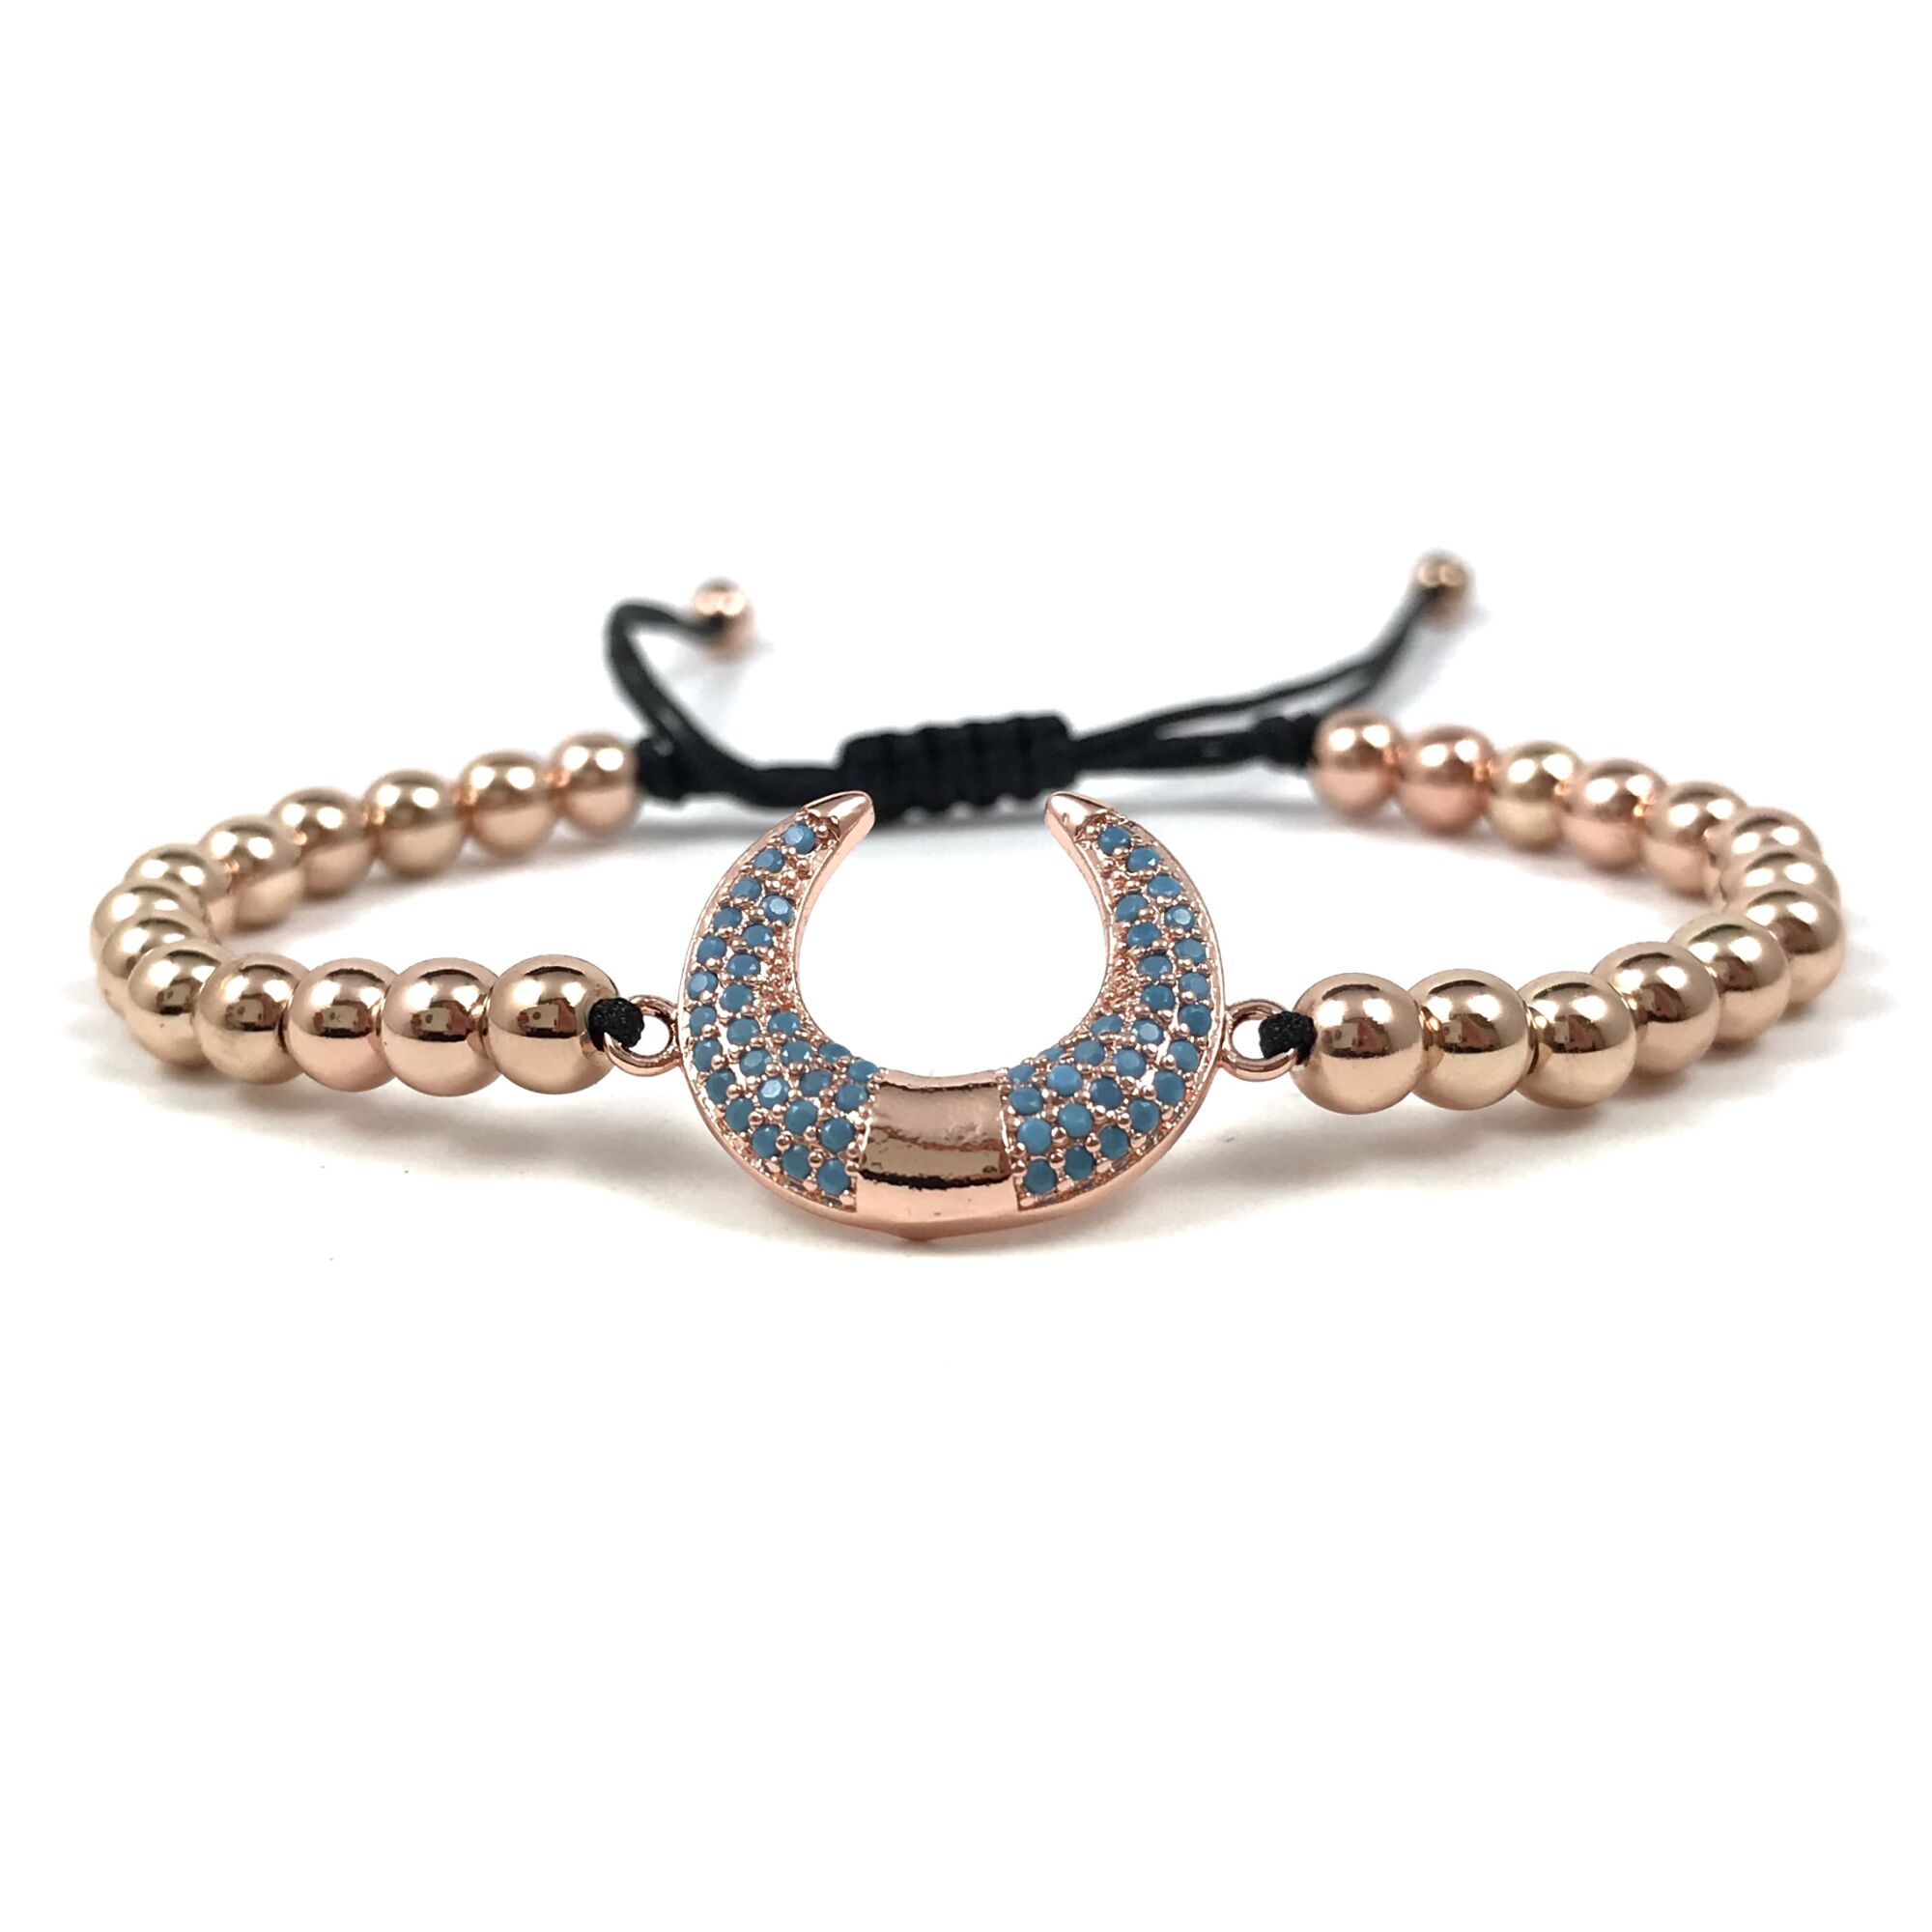 Luxury rosegold half moon cord bracelet